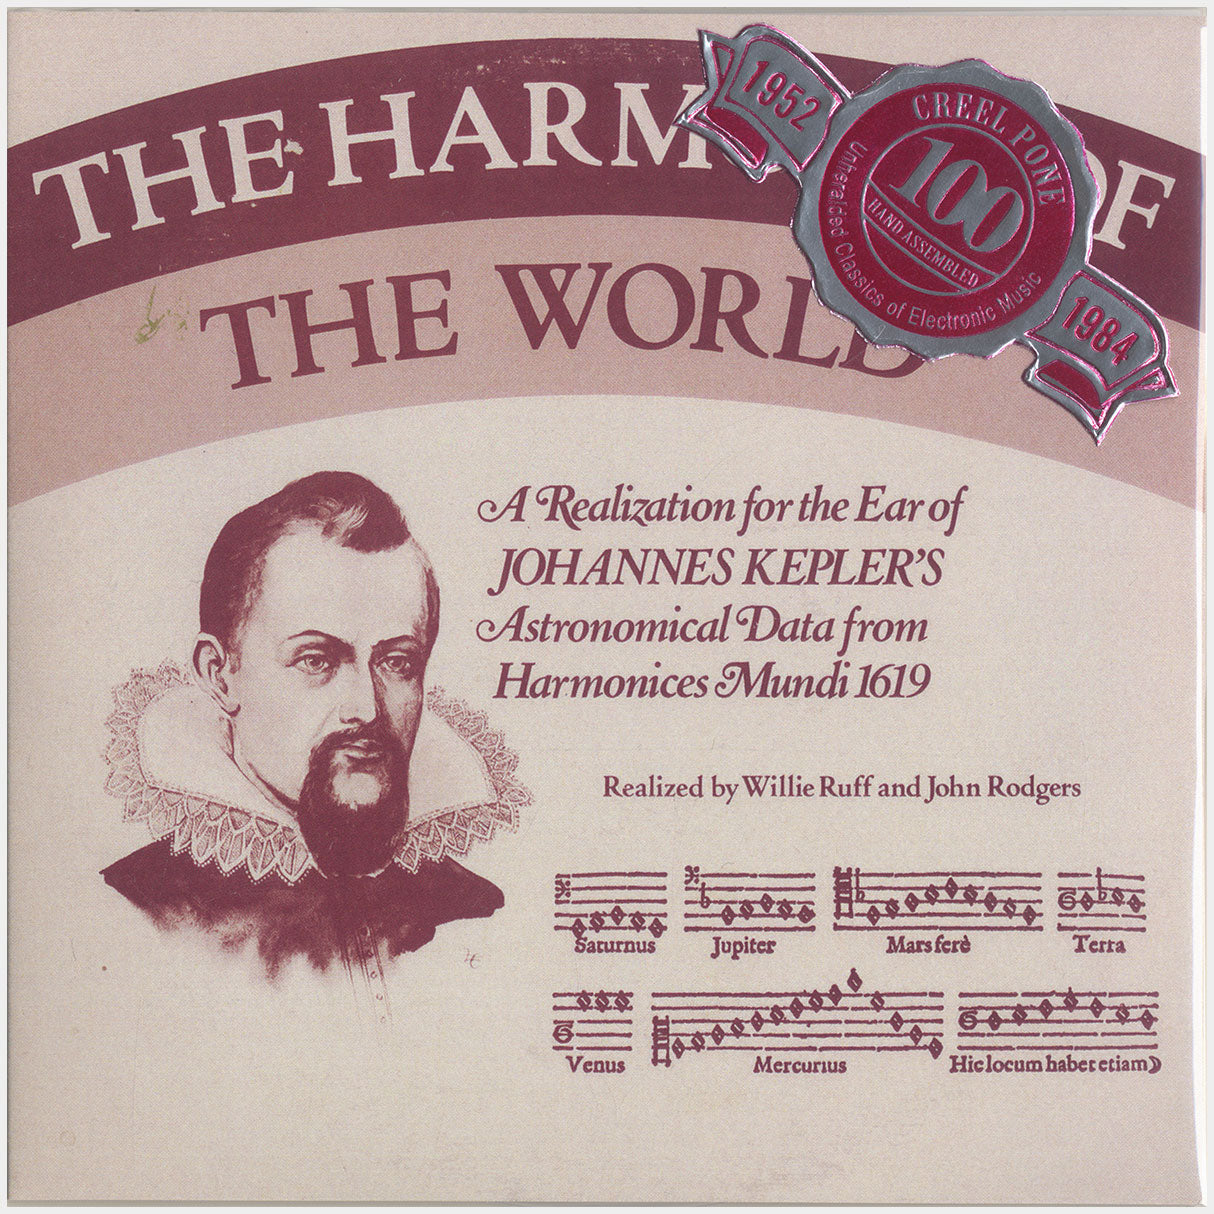 [CP 188 CD] Willie Ruff, John Rodgers, Michael McNabb; The Harmony of the World